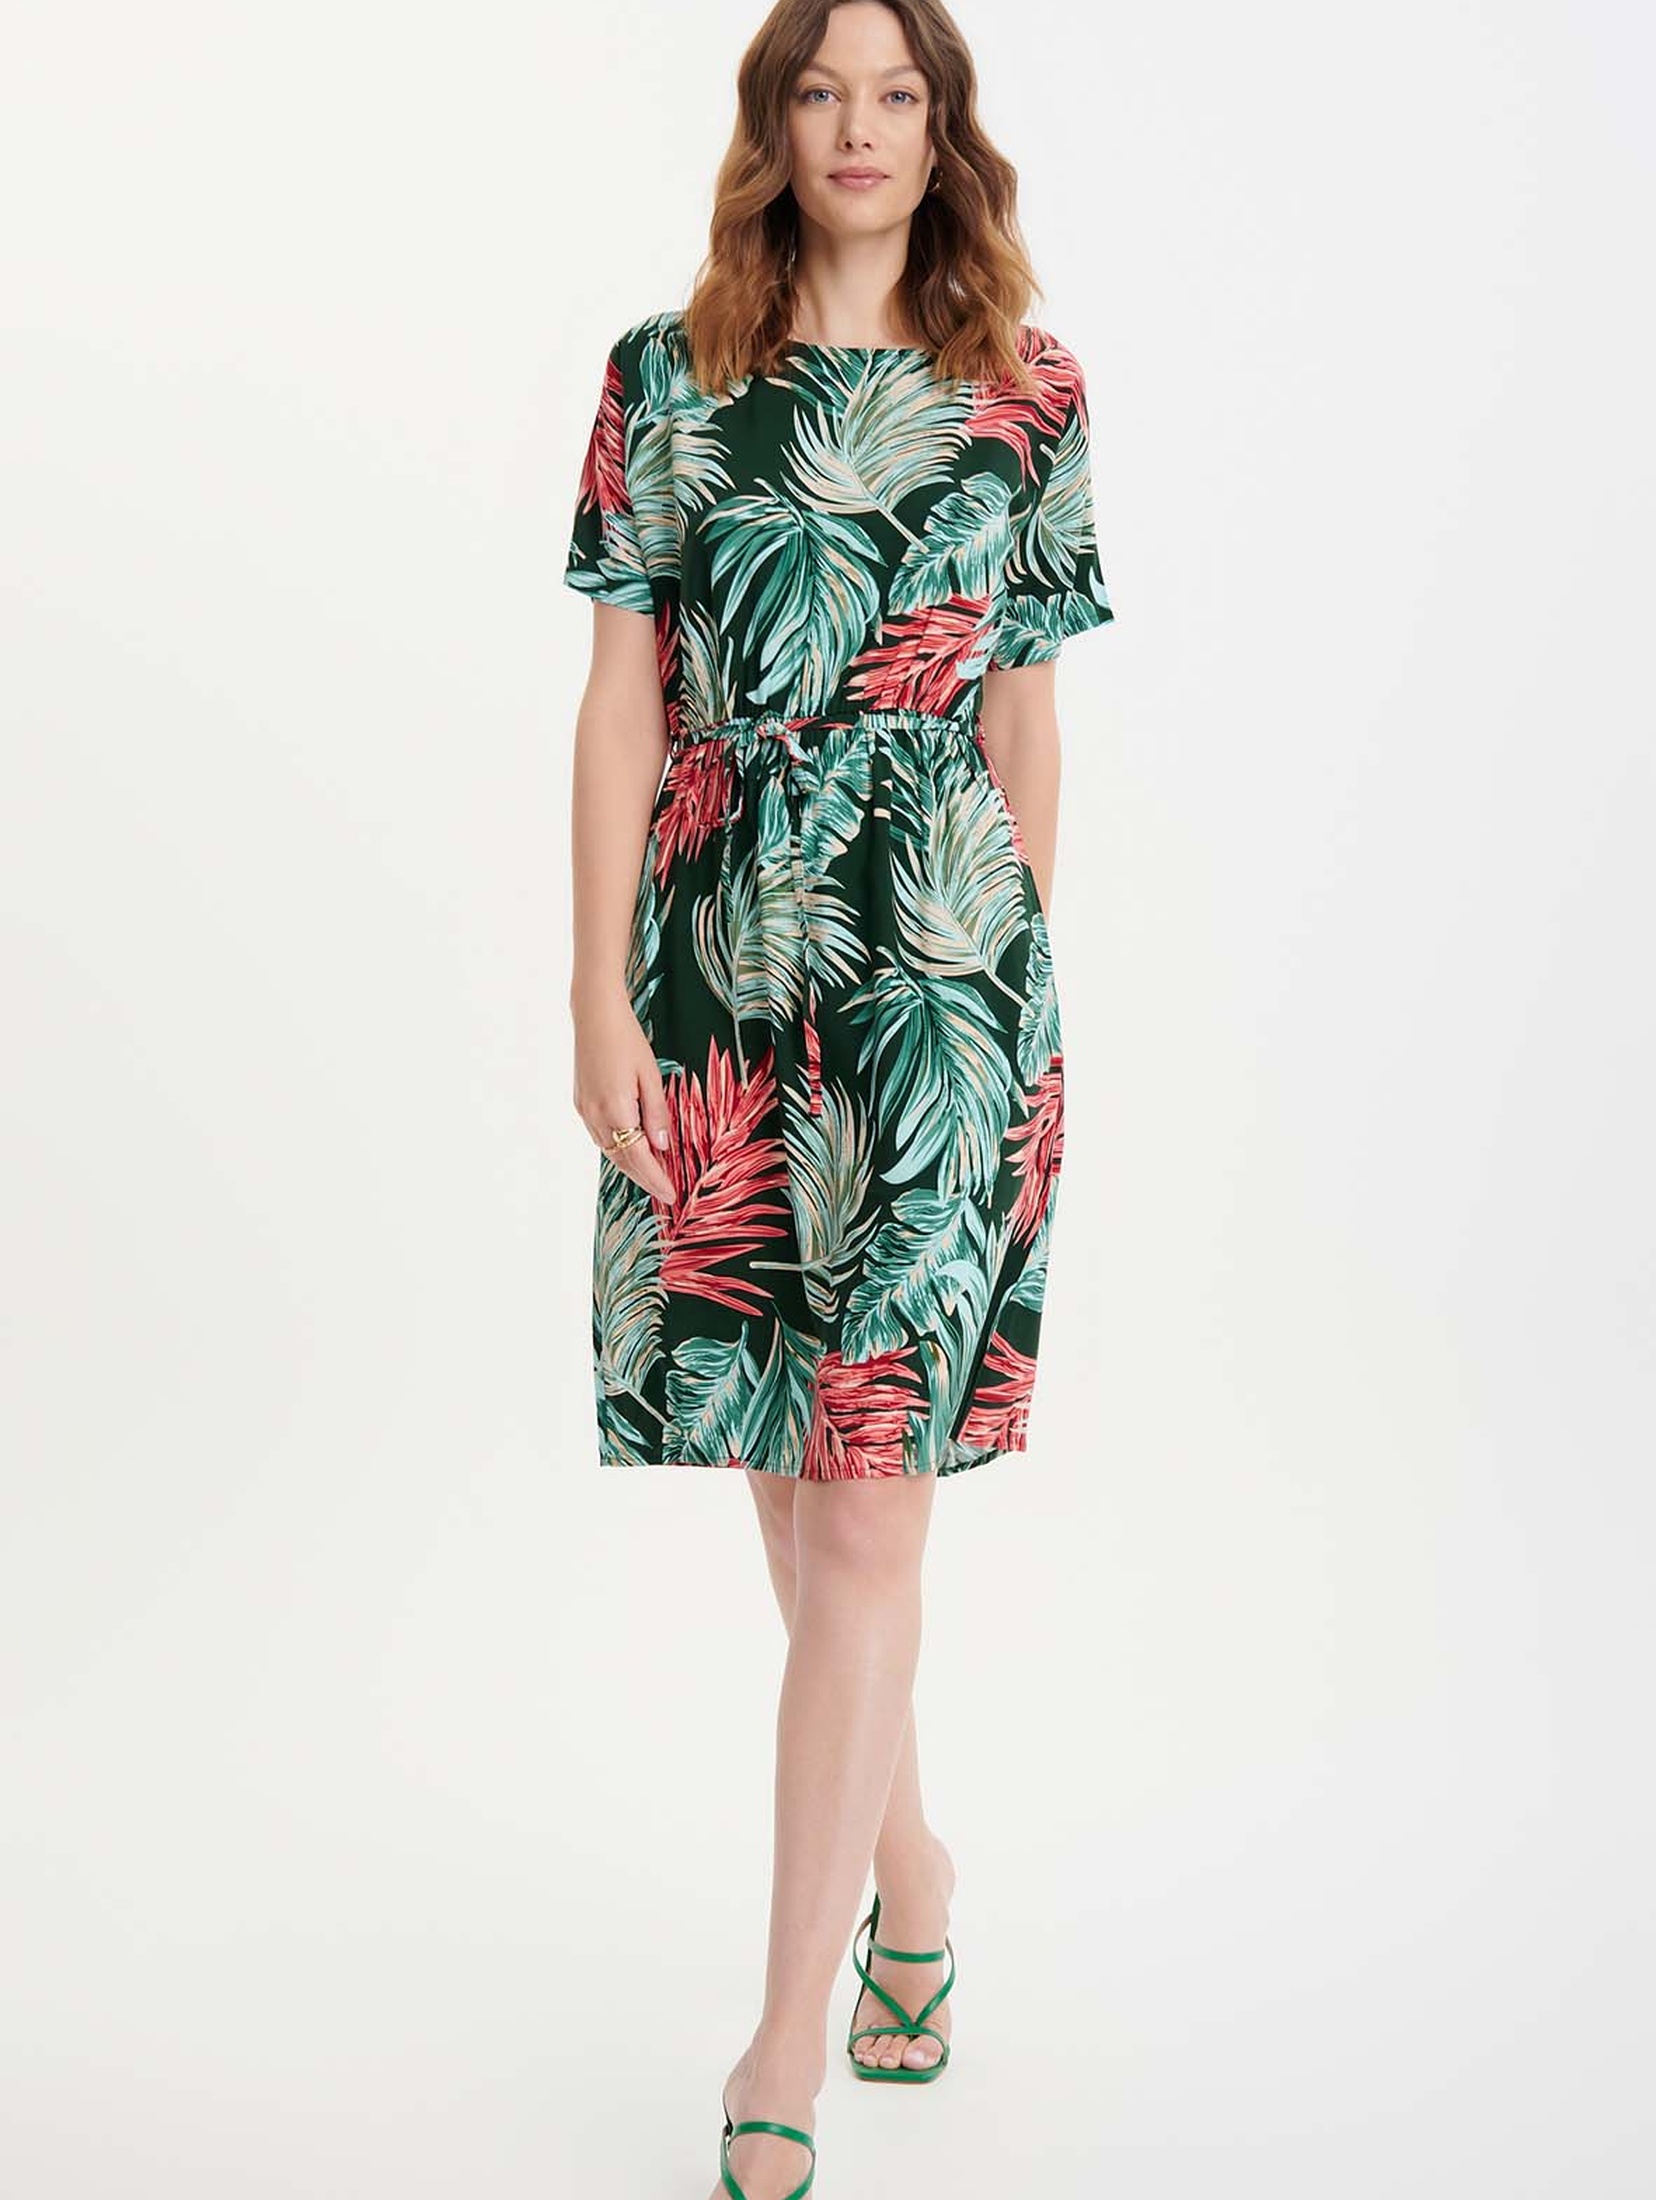 Damska sukienka krótka wielokolorowa z nadrukiem tropic